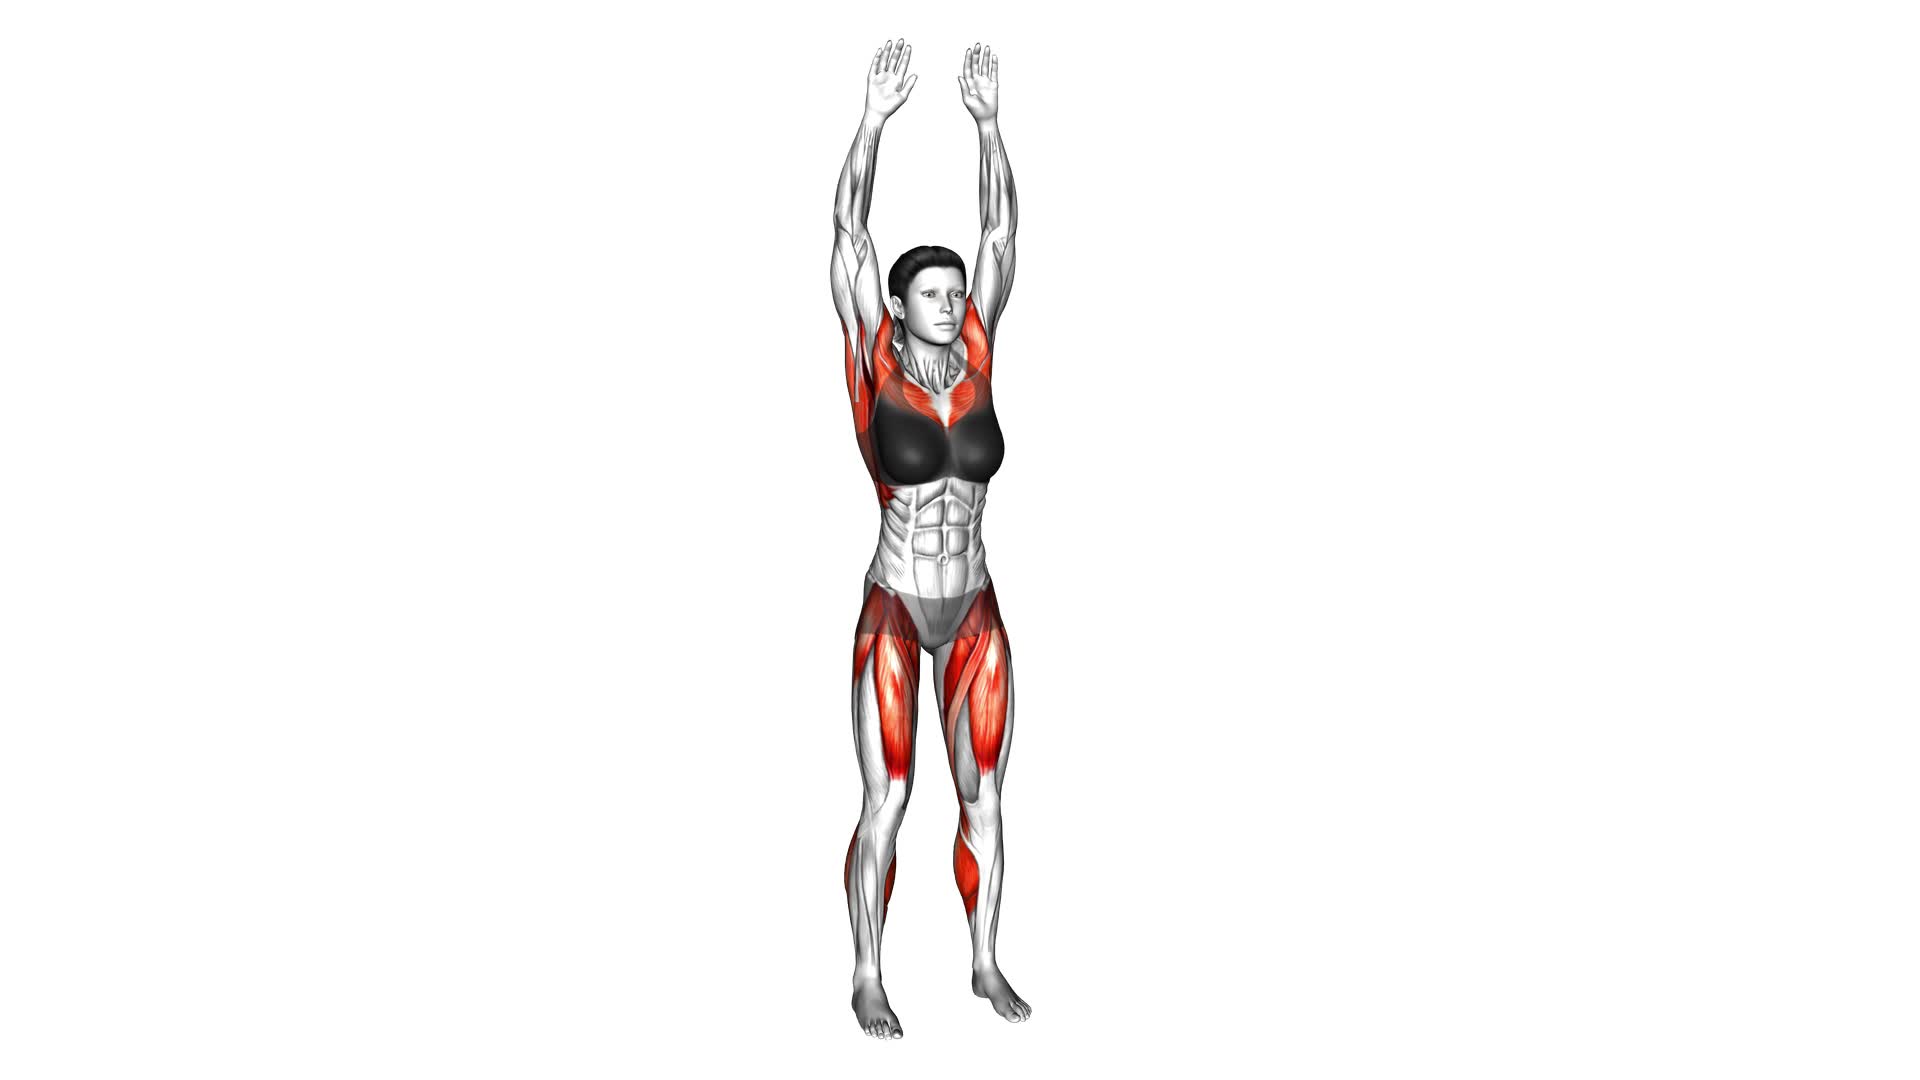 Leg Front Lift Jack (female) - Video Exercise Guide & Tips